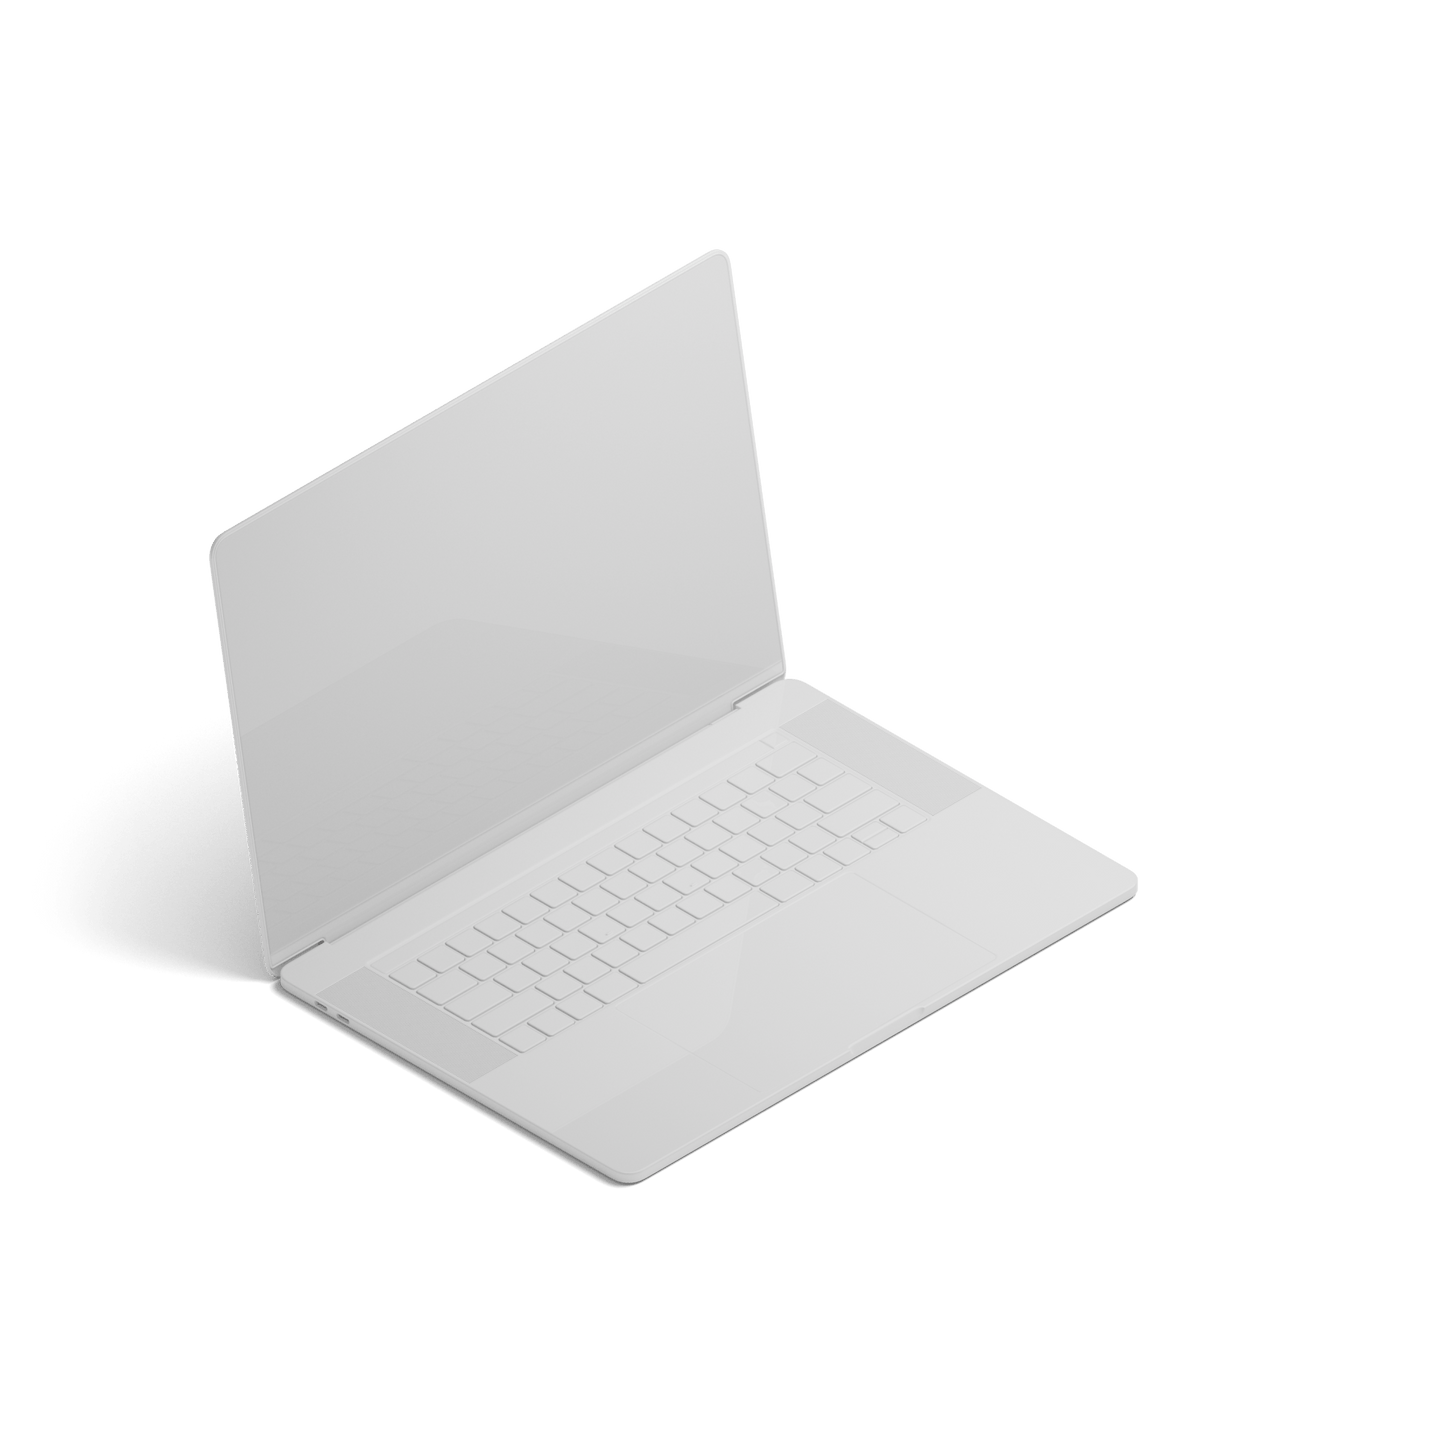 Laptop 3 - TCA Ninja